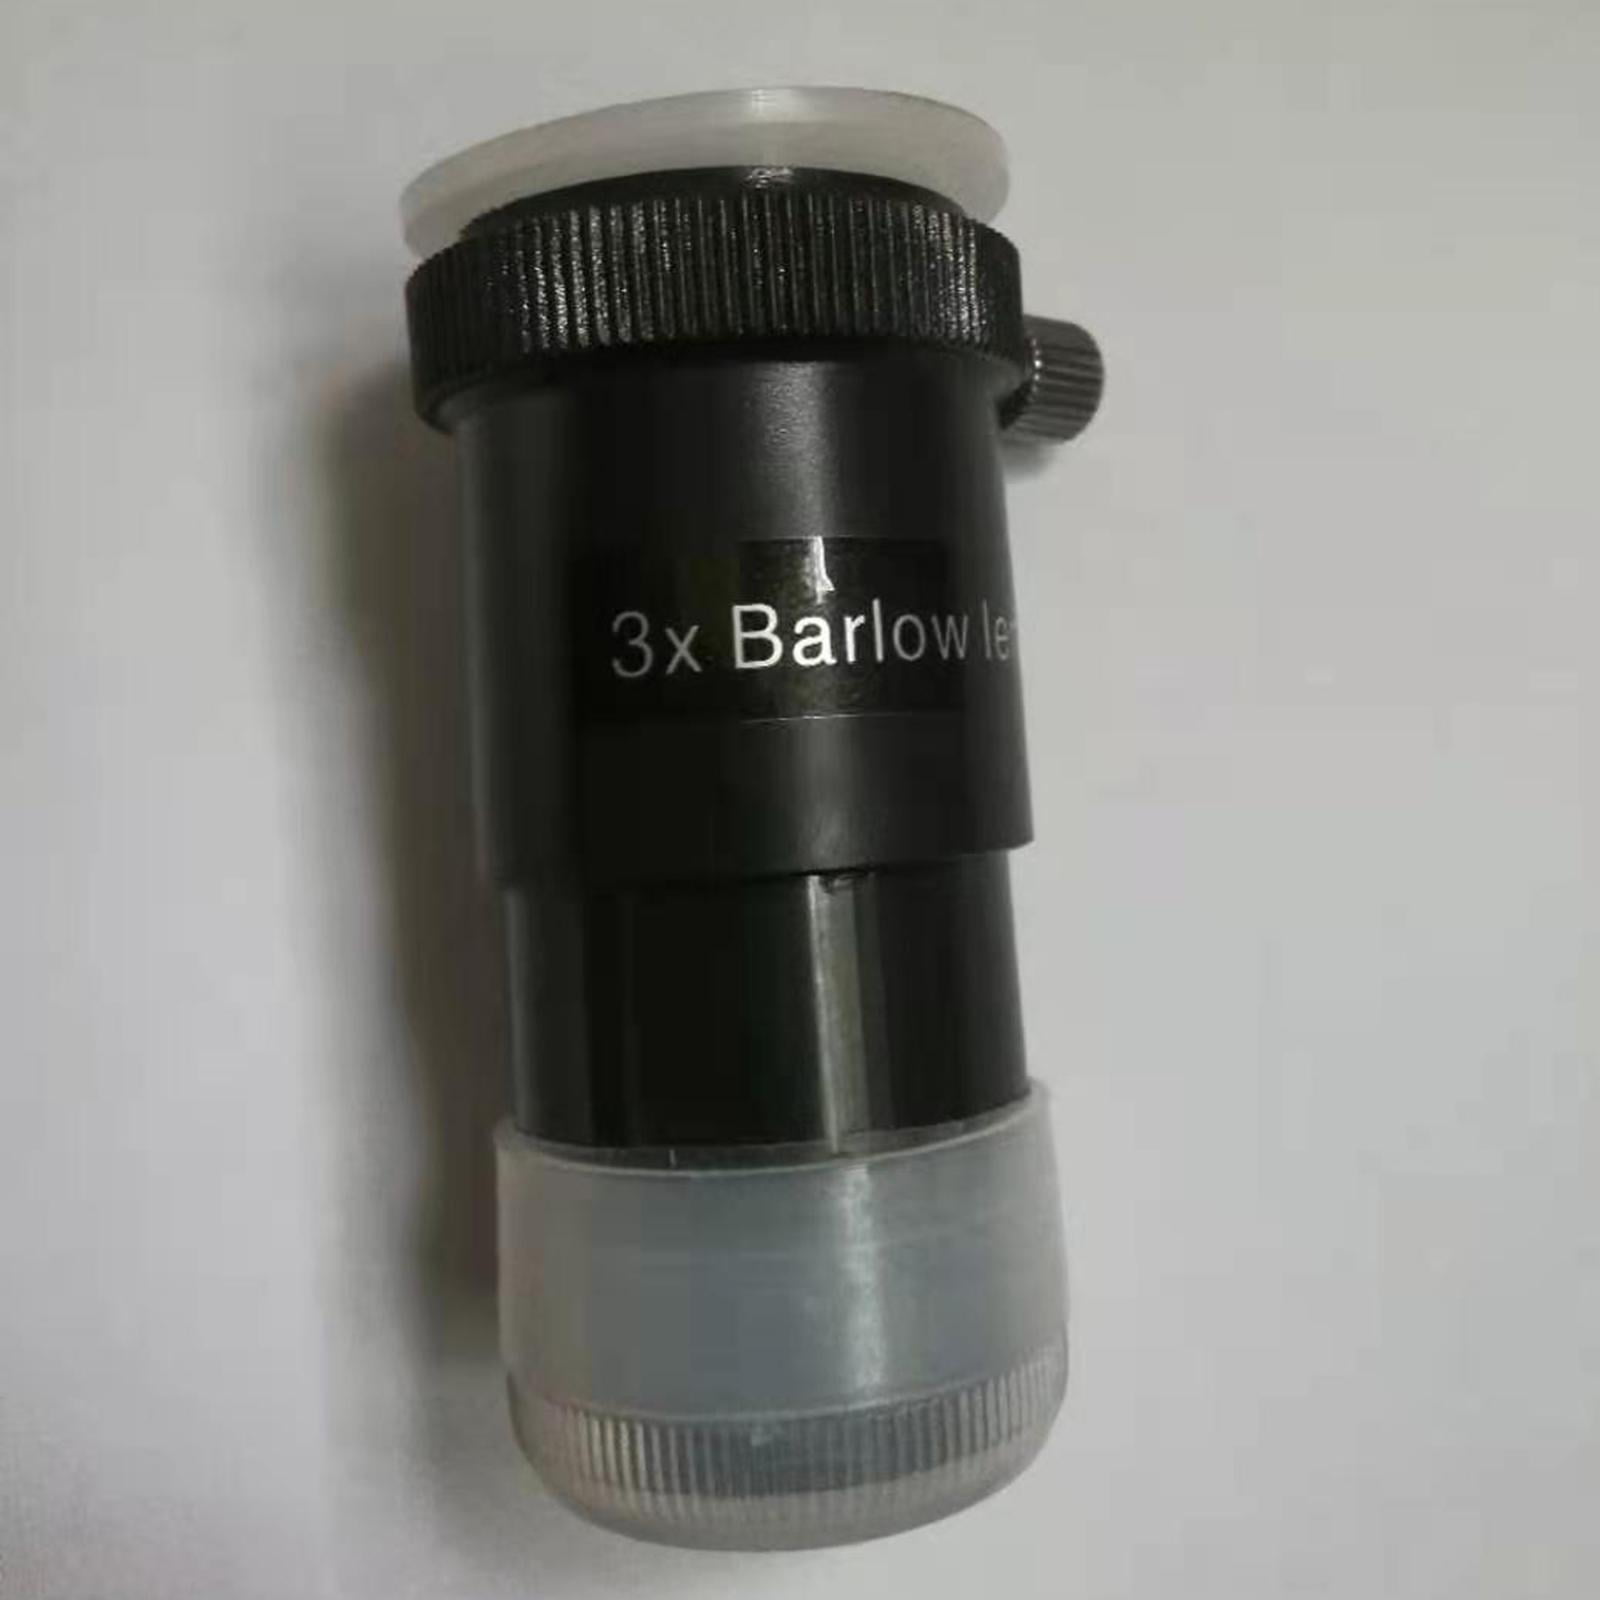 Baosity Barlow Lens 3X Telescope Eyepiece Fully Multi-Coated HD Broadband Purple Film 1.25 Interface with Phone Mount Adapter 